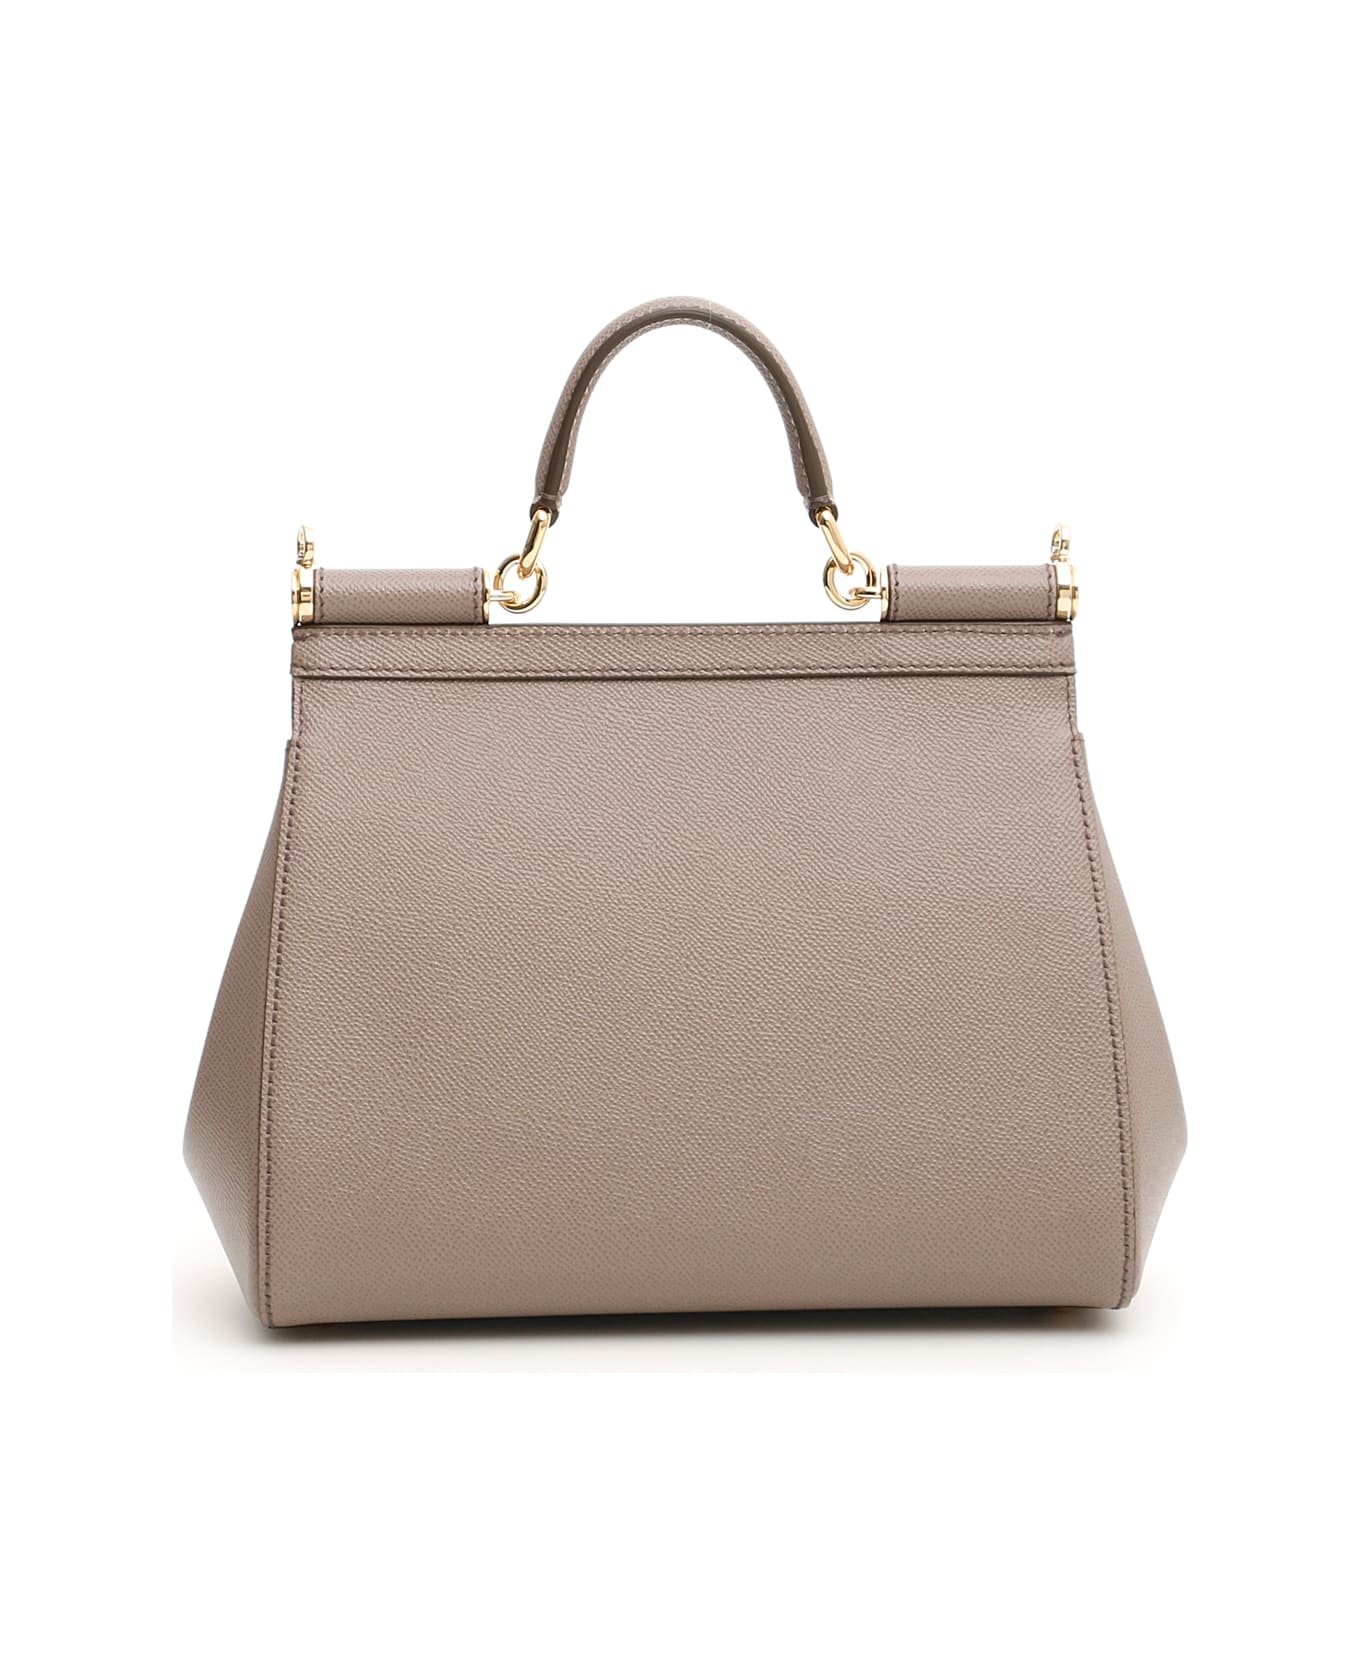 Dolce & Gabbana Sicily Handbag - Grey